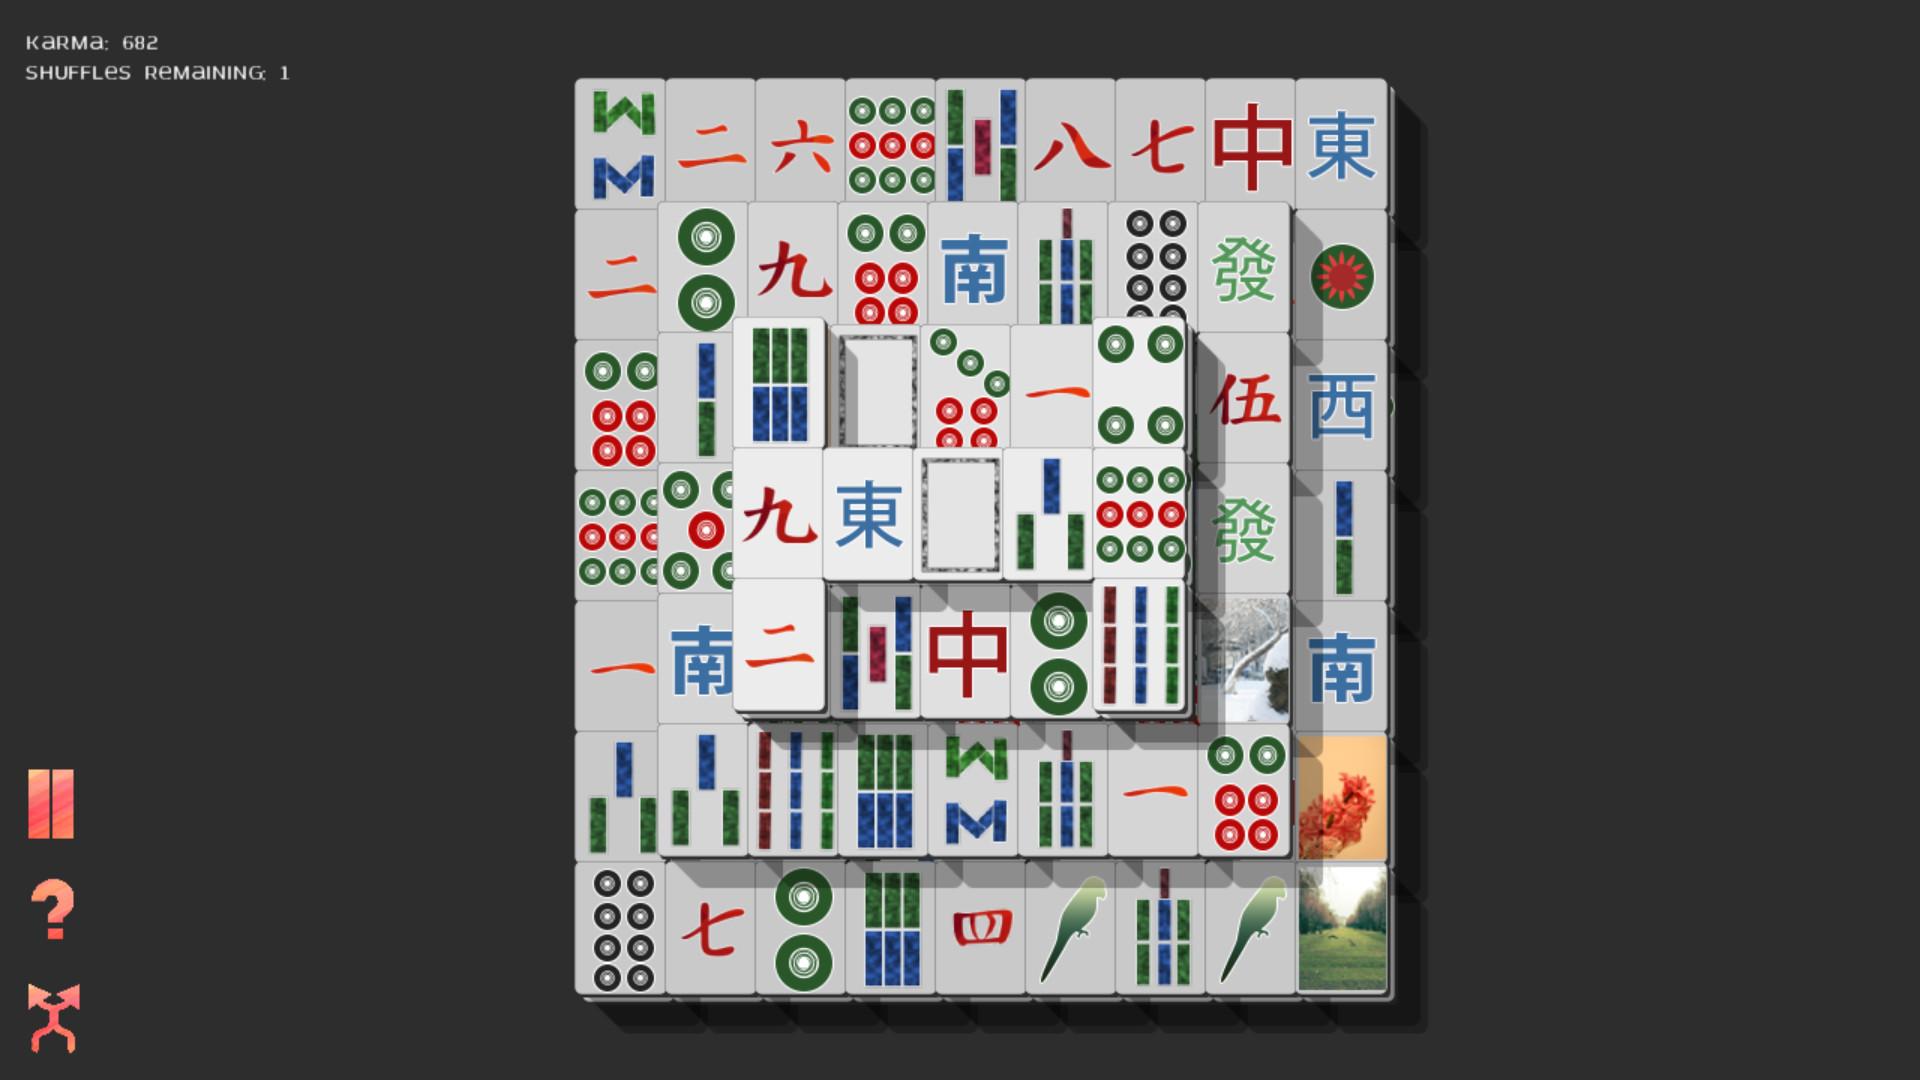 Screenshot №2 from game That's Mahjong!